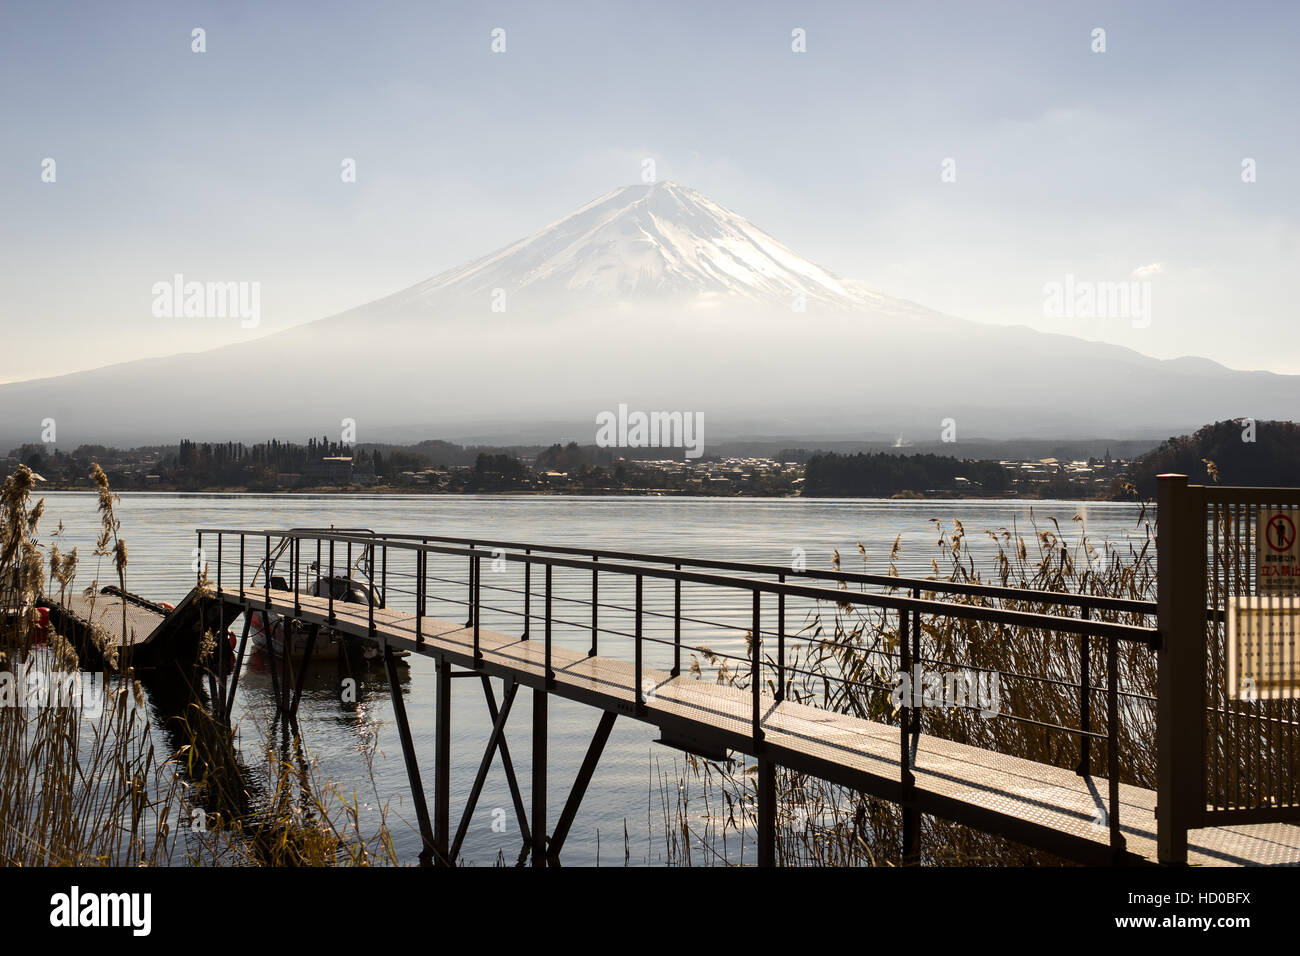 View of Fuji Mountain from Kawaguchi Lake Stock Photo